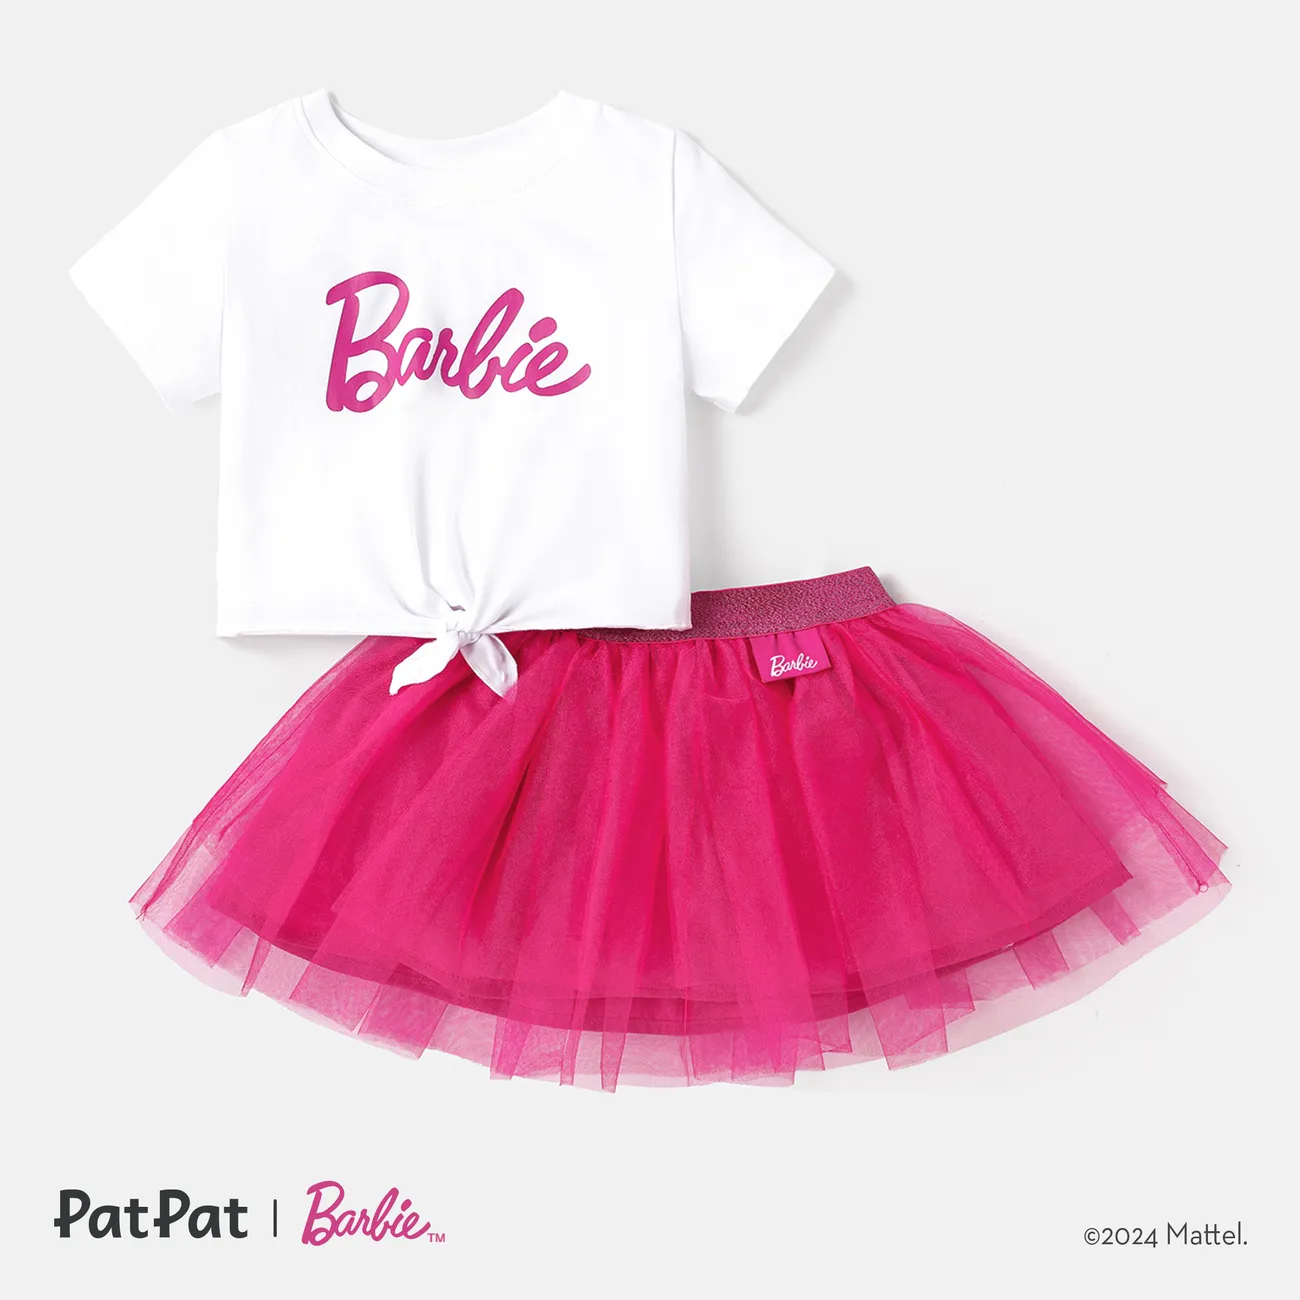 Barbie Kleinkind Kid Mädchen Kleid / Bomber Jacke / Cami Strampler / Sets / Geschwister Matching Strampler PinkyWhite#2 big image 1